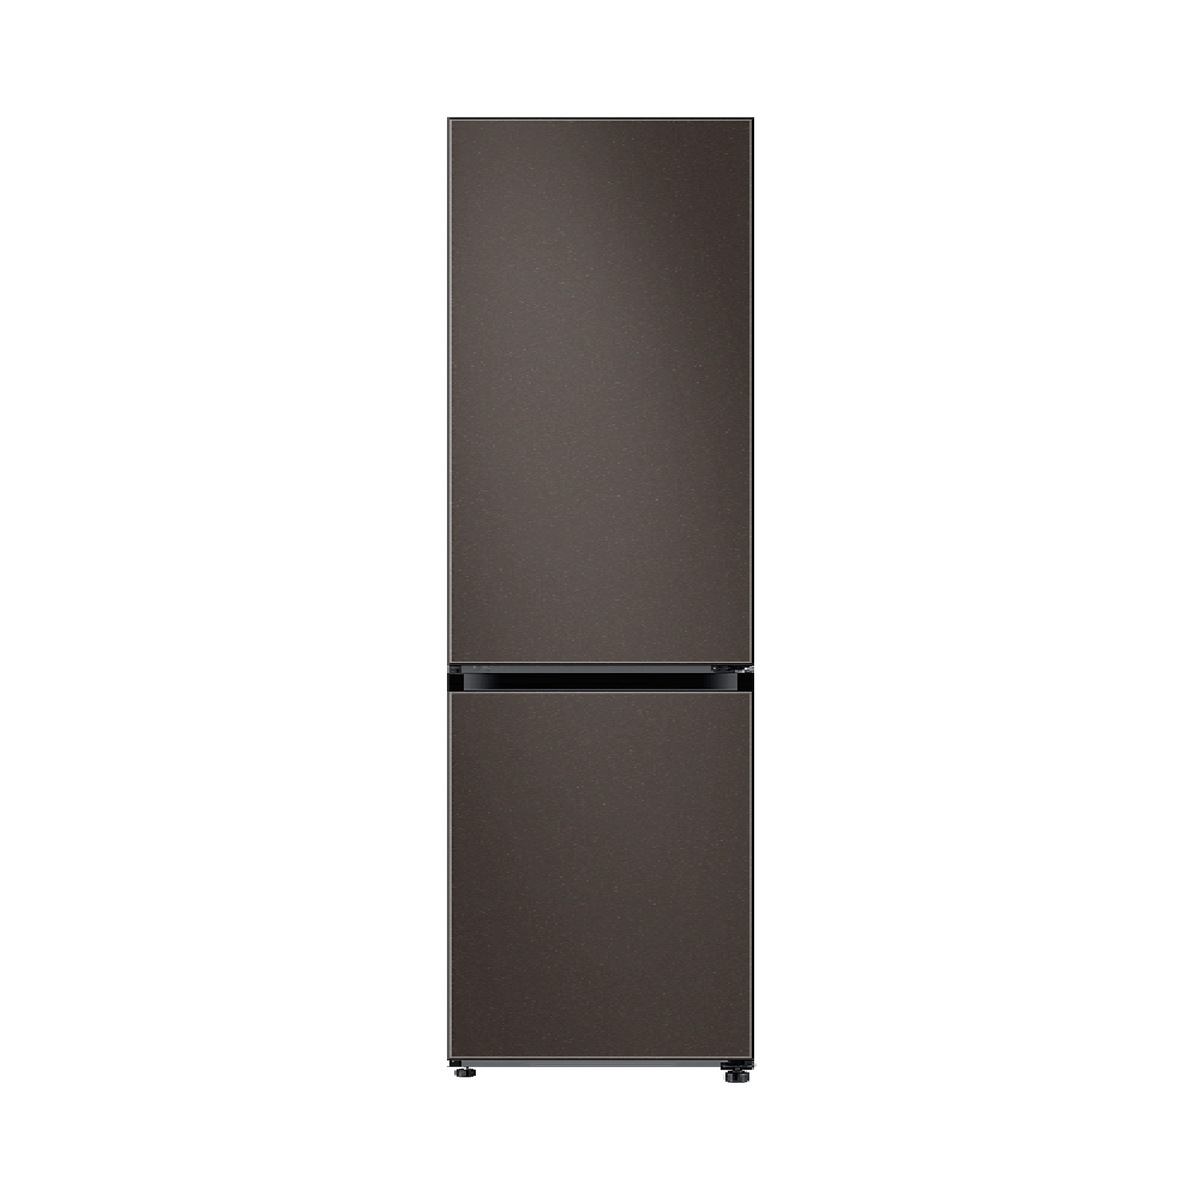 Samsung Bottom Freezer Refrigerator, 350 L, Cotta Charcoal, RB33A300405